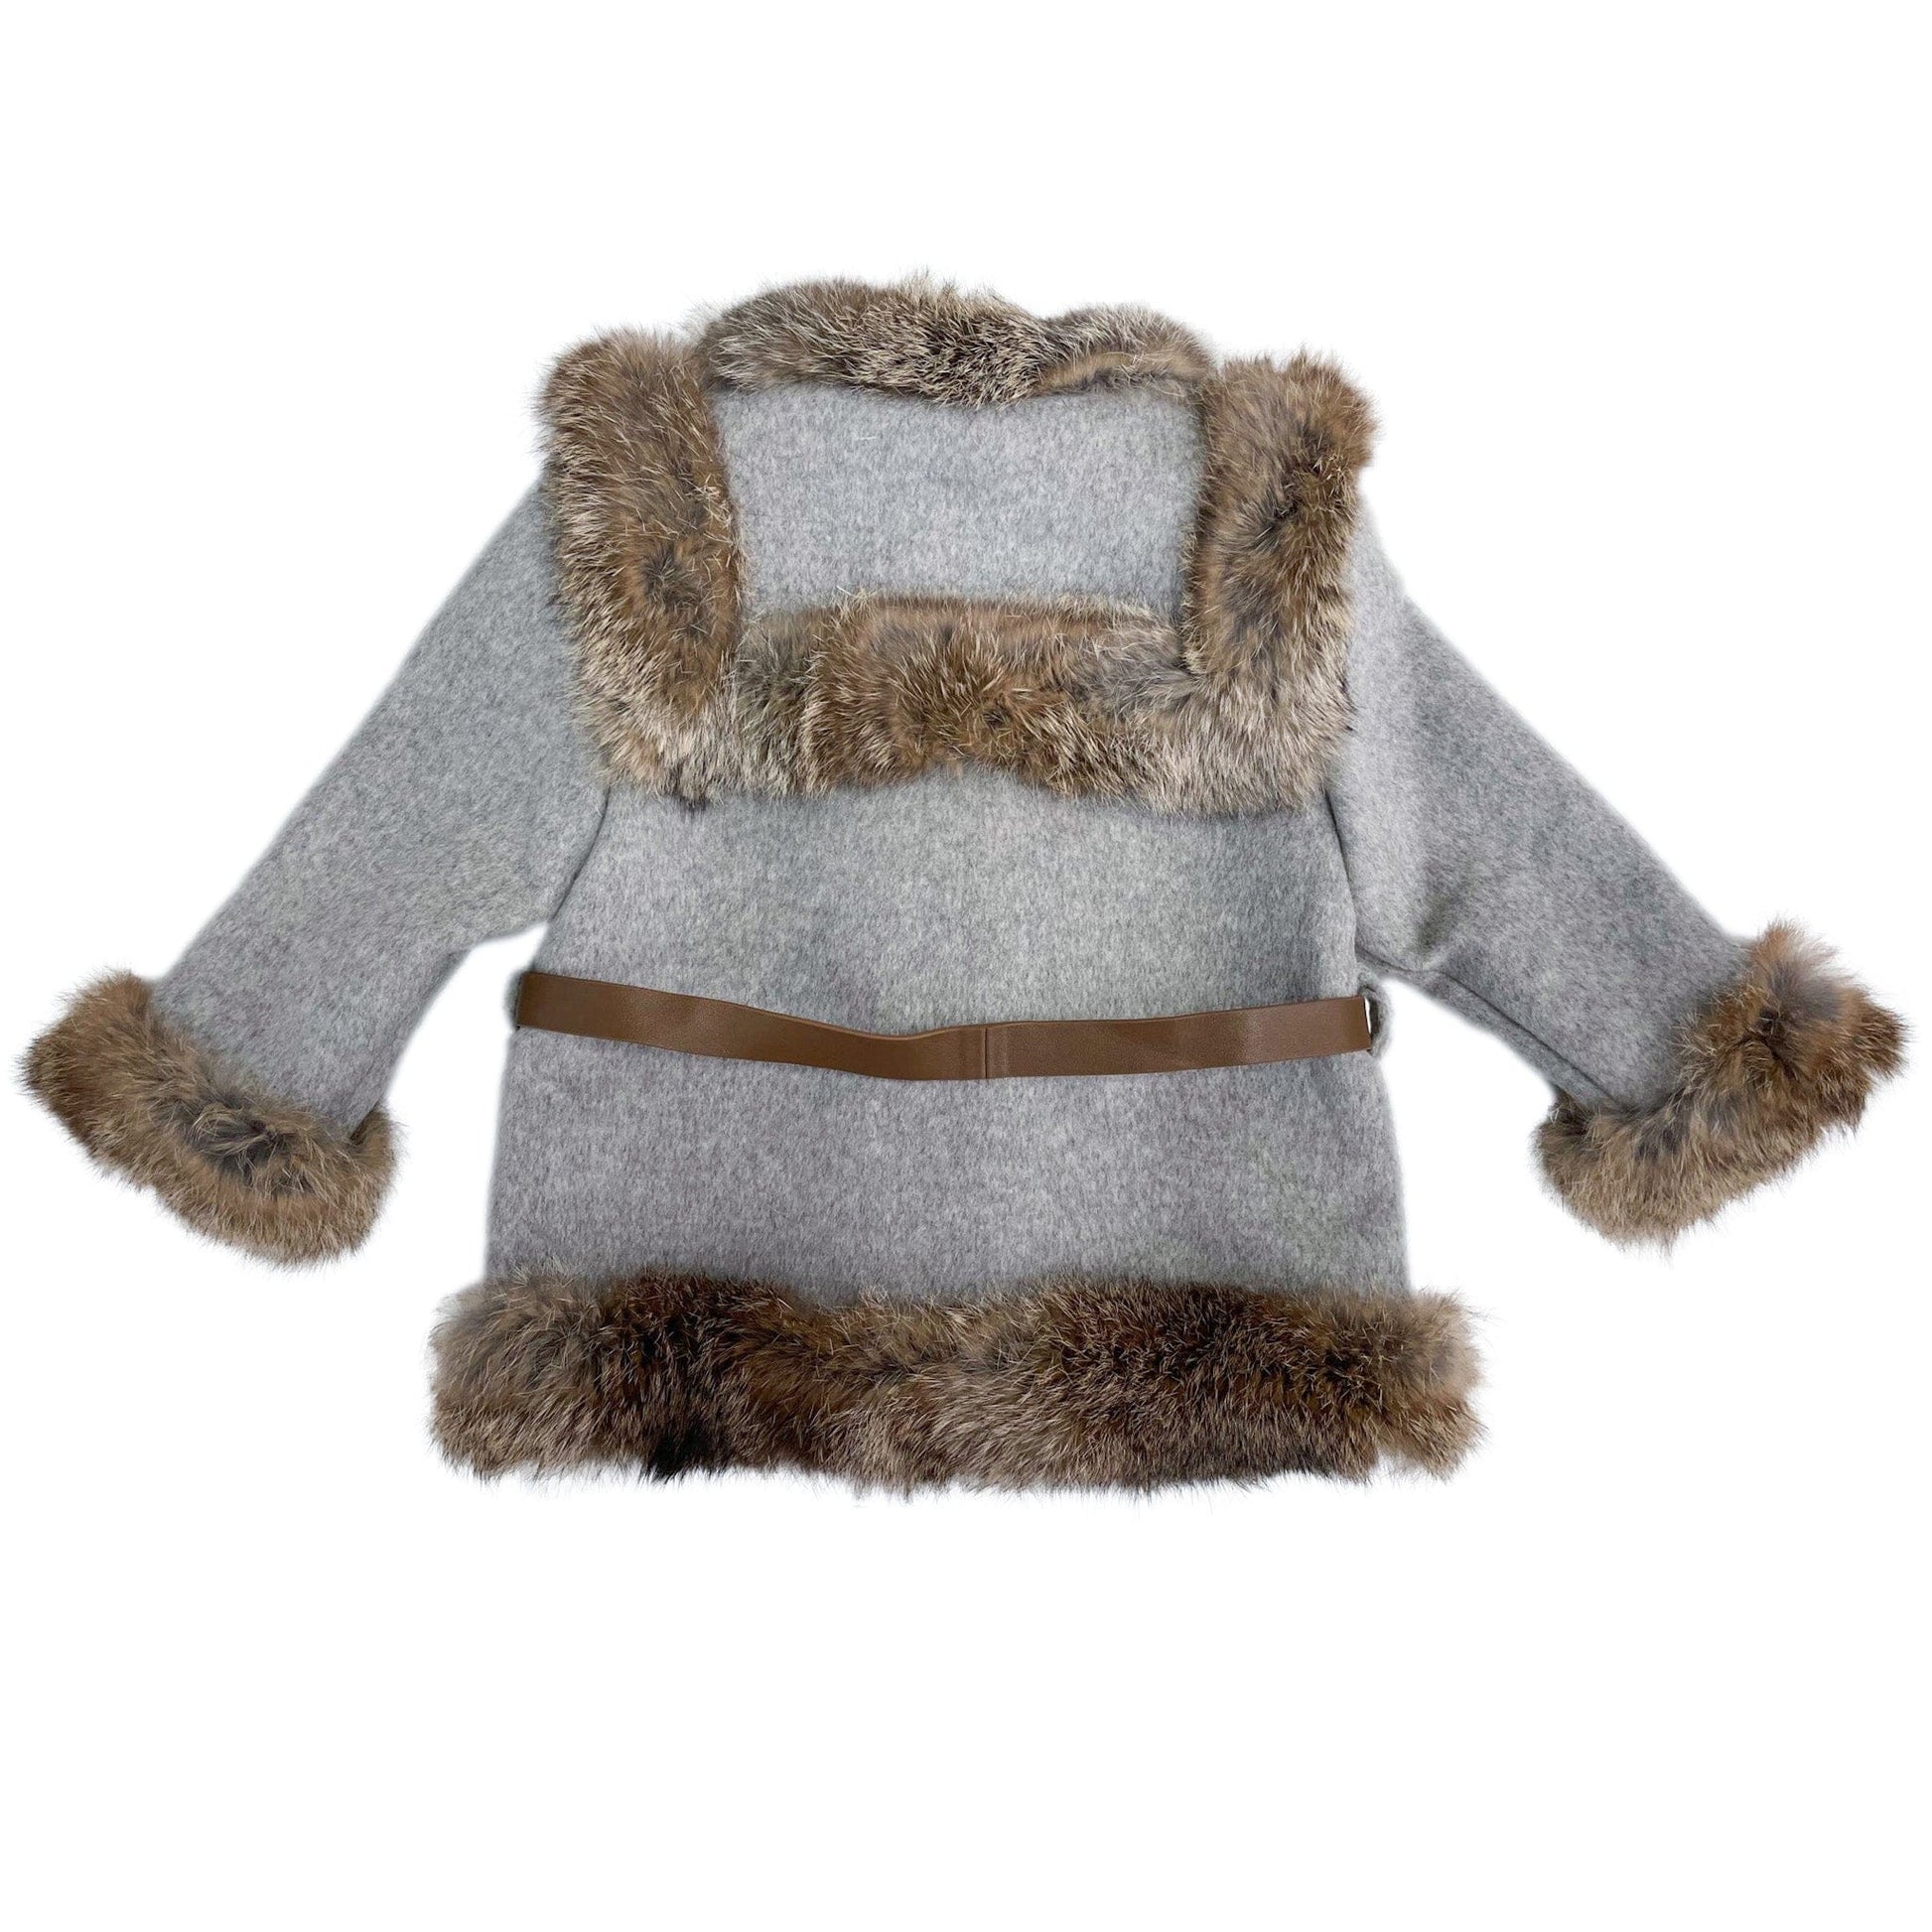 Peter Grey Wool Coat - Petite Maison Kids